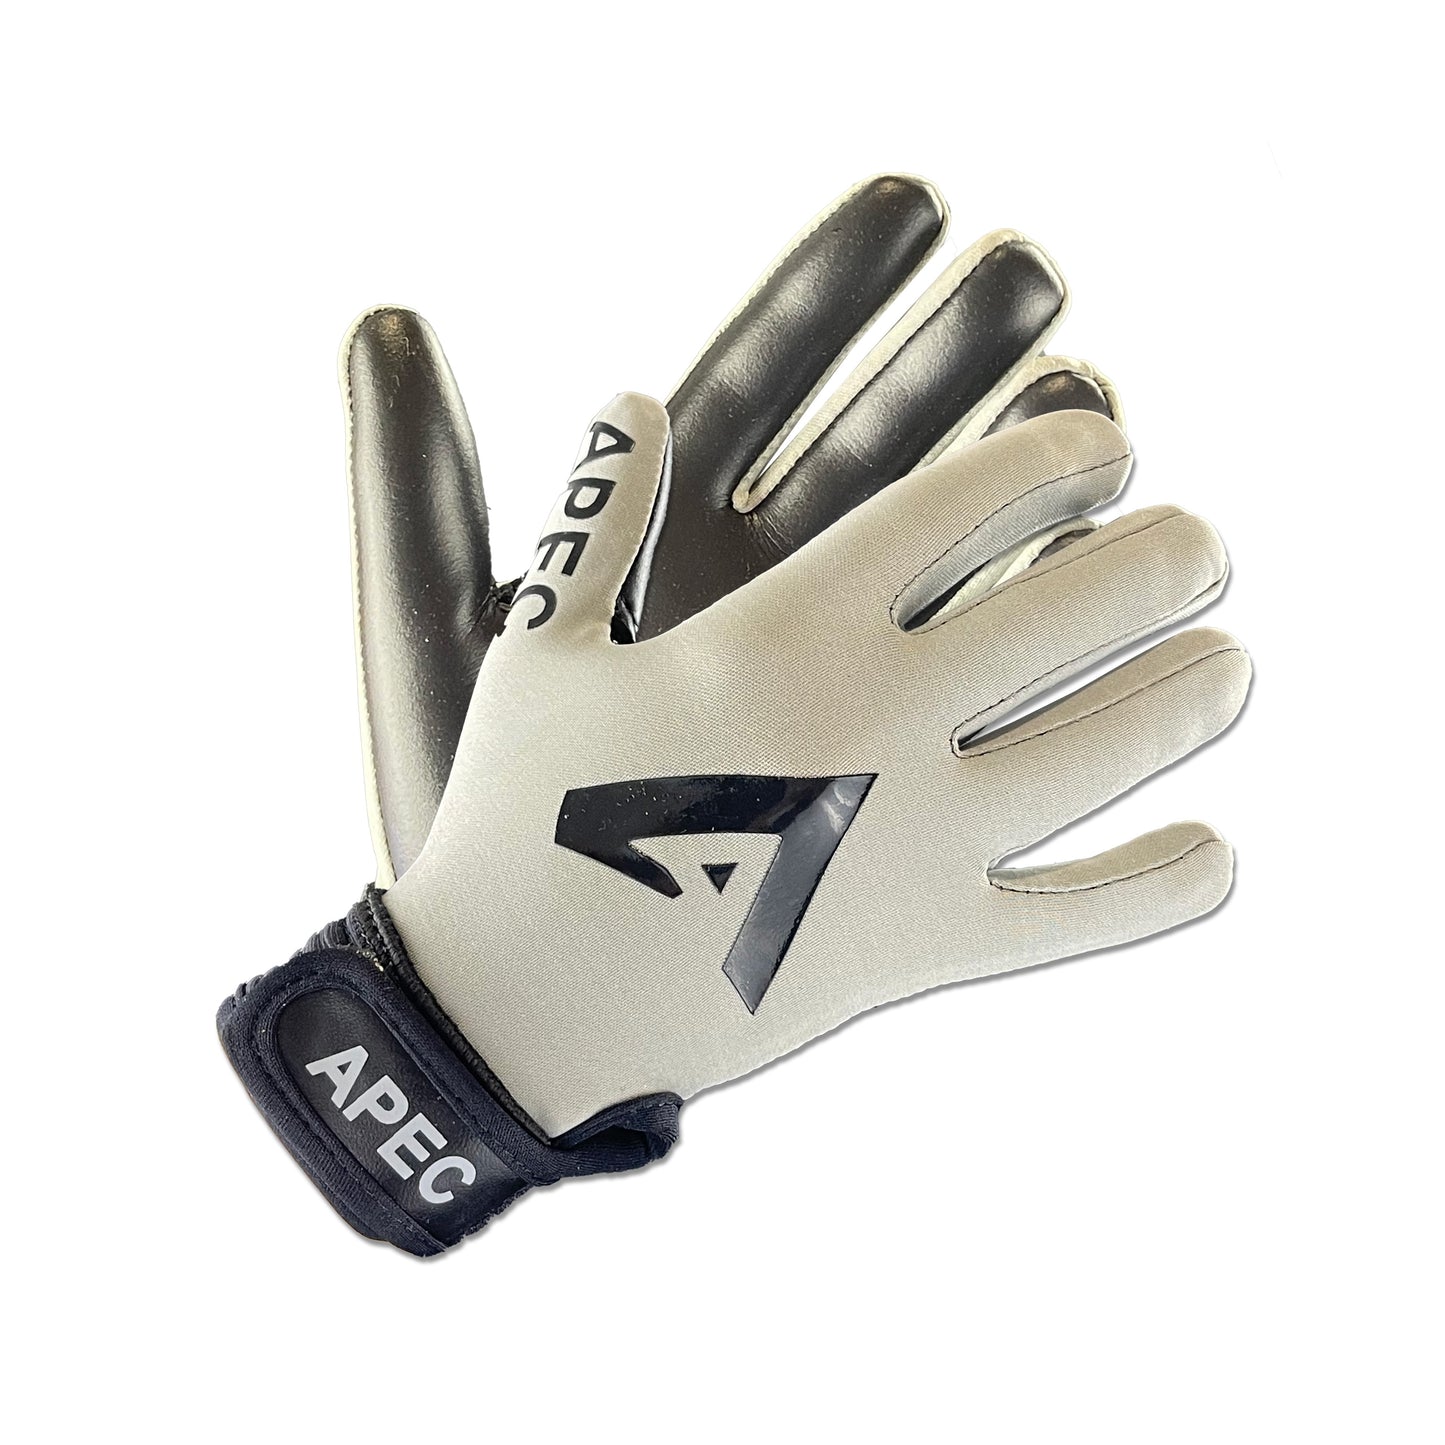 Flex Gaelic Glove Grey / Black